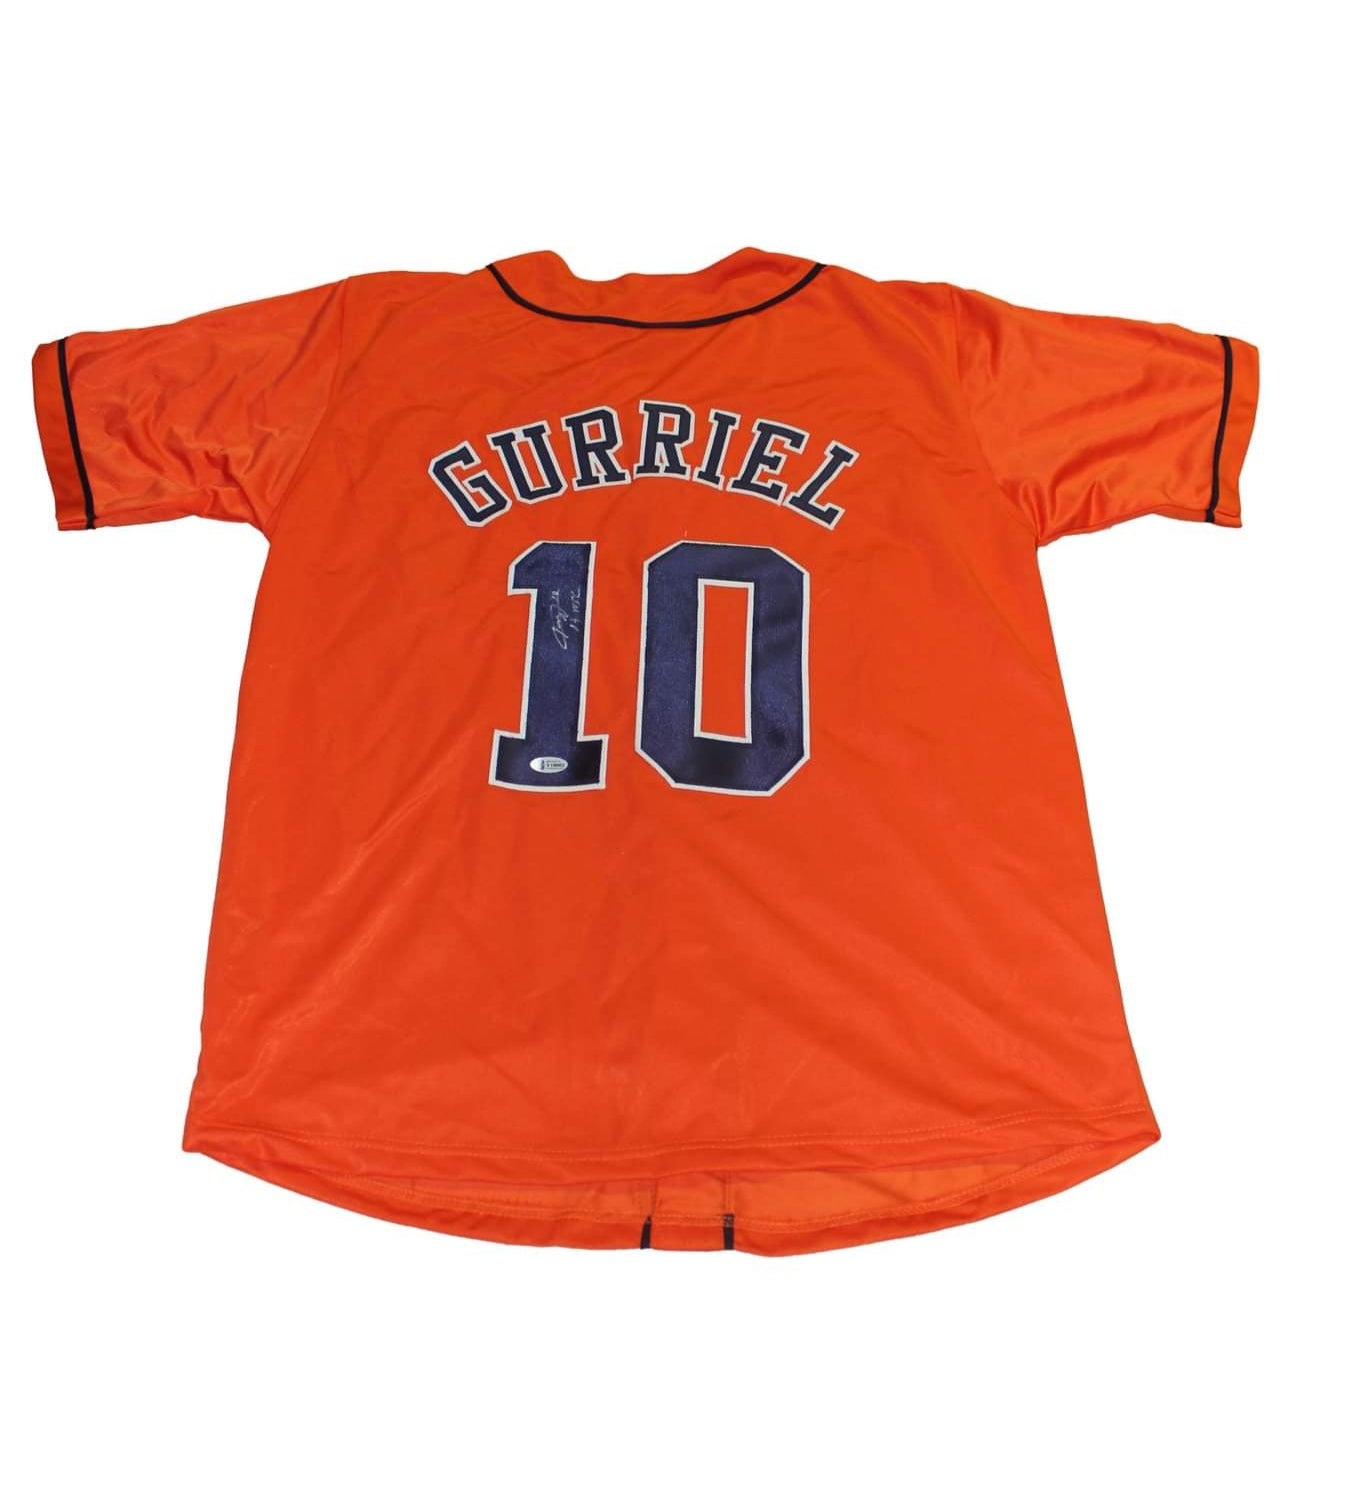 Yuli Gurriel - Signed Jersey - MLB